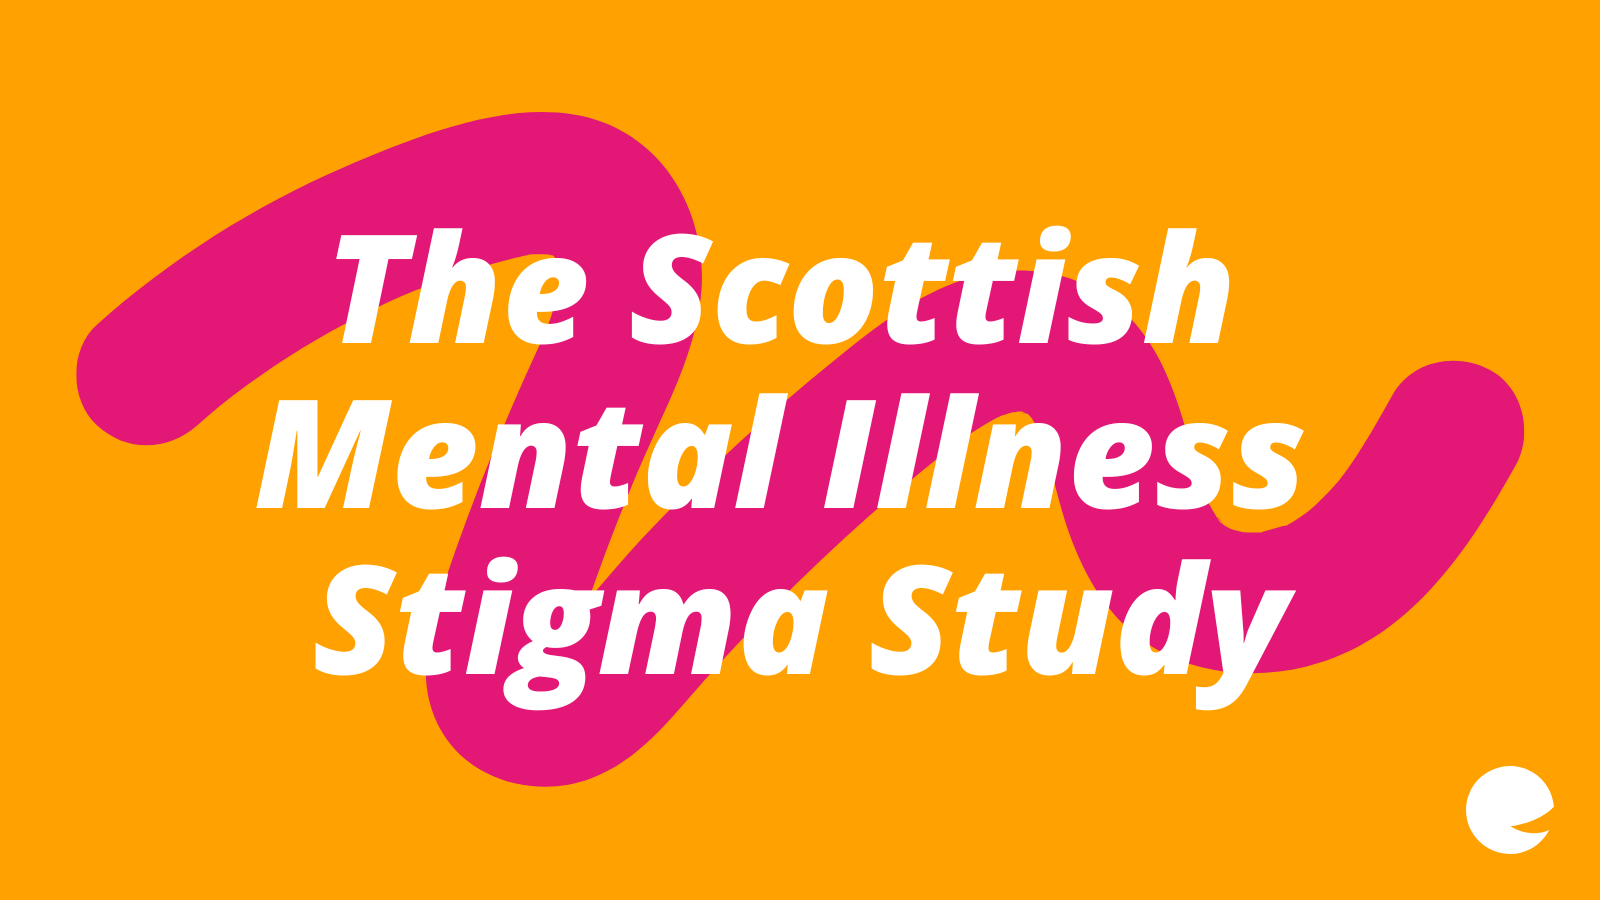 Text reads: The Scottish Mental Illness Stigma Study